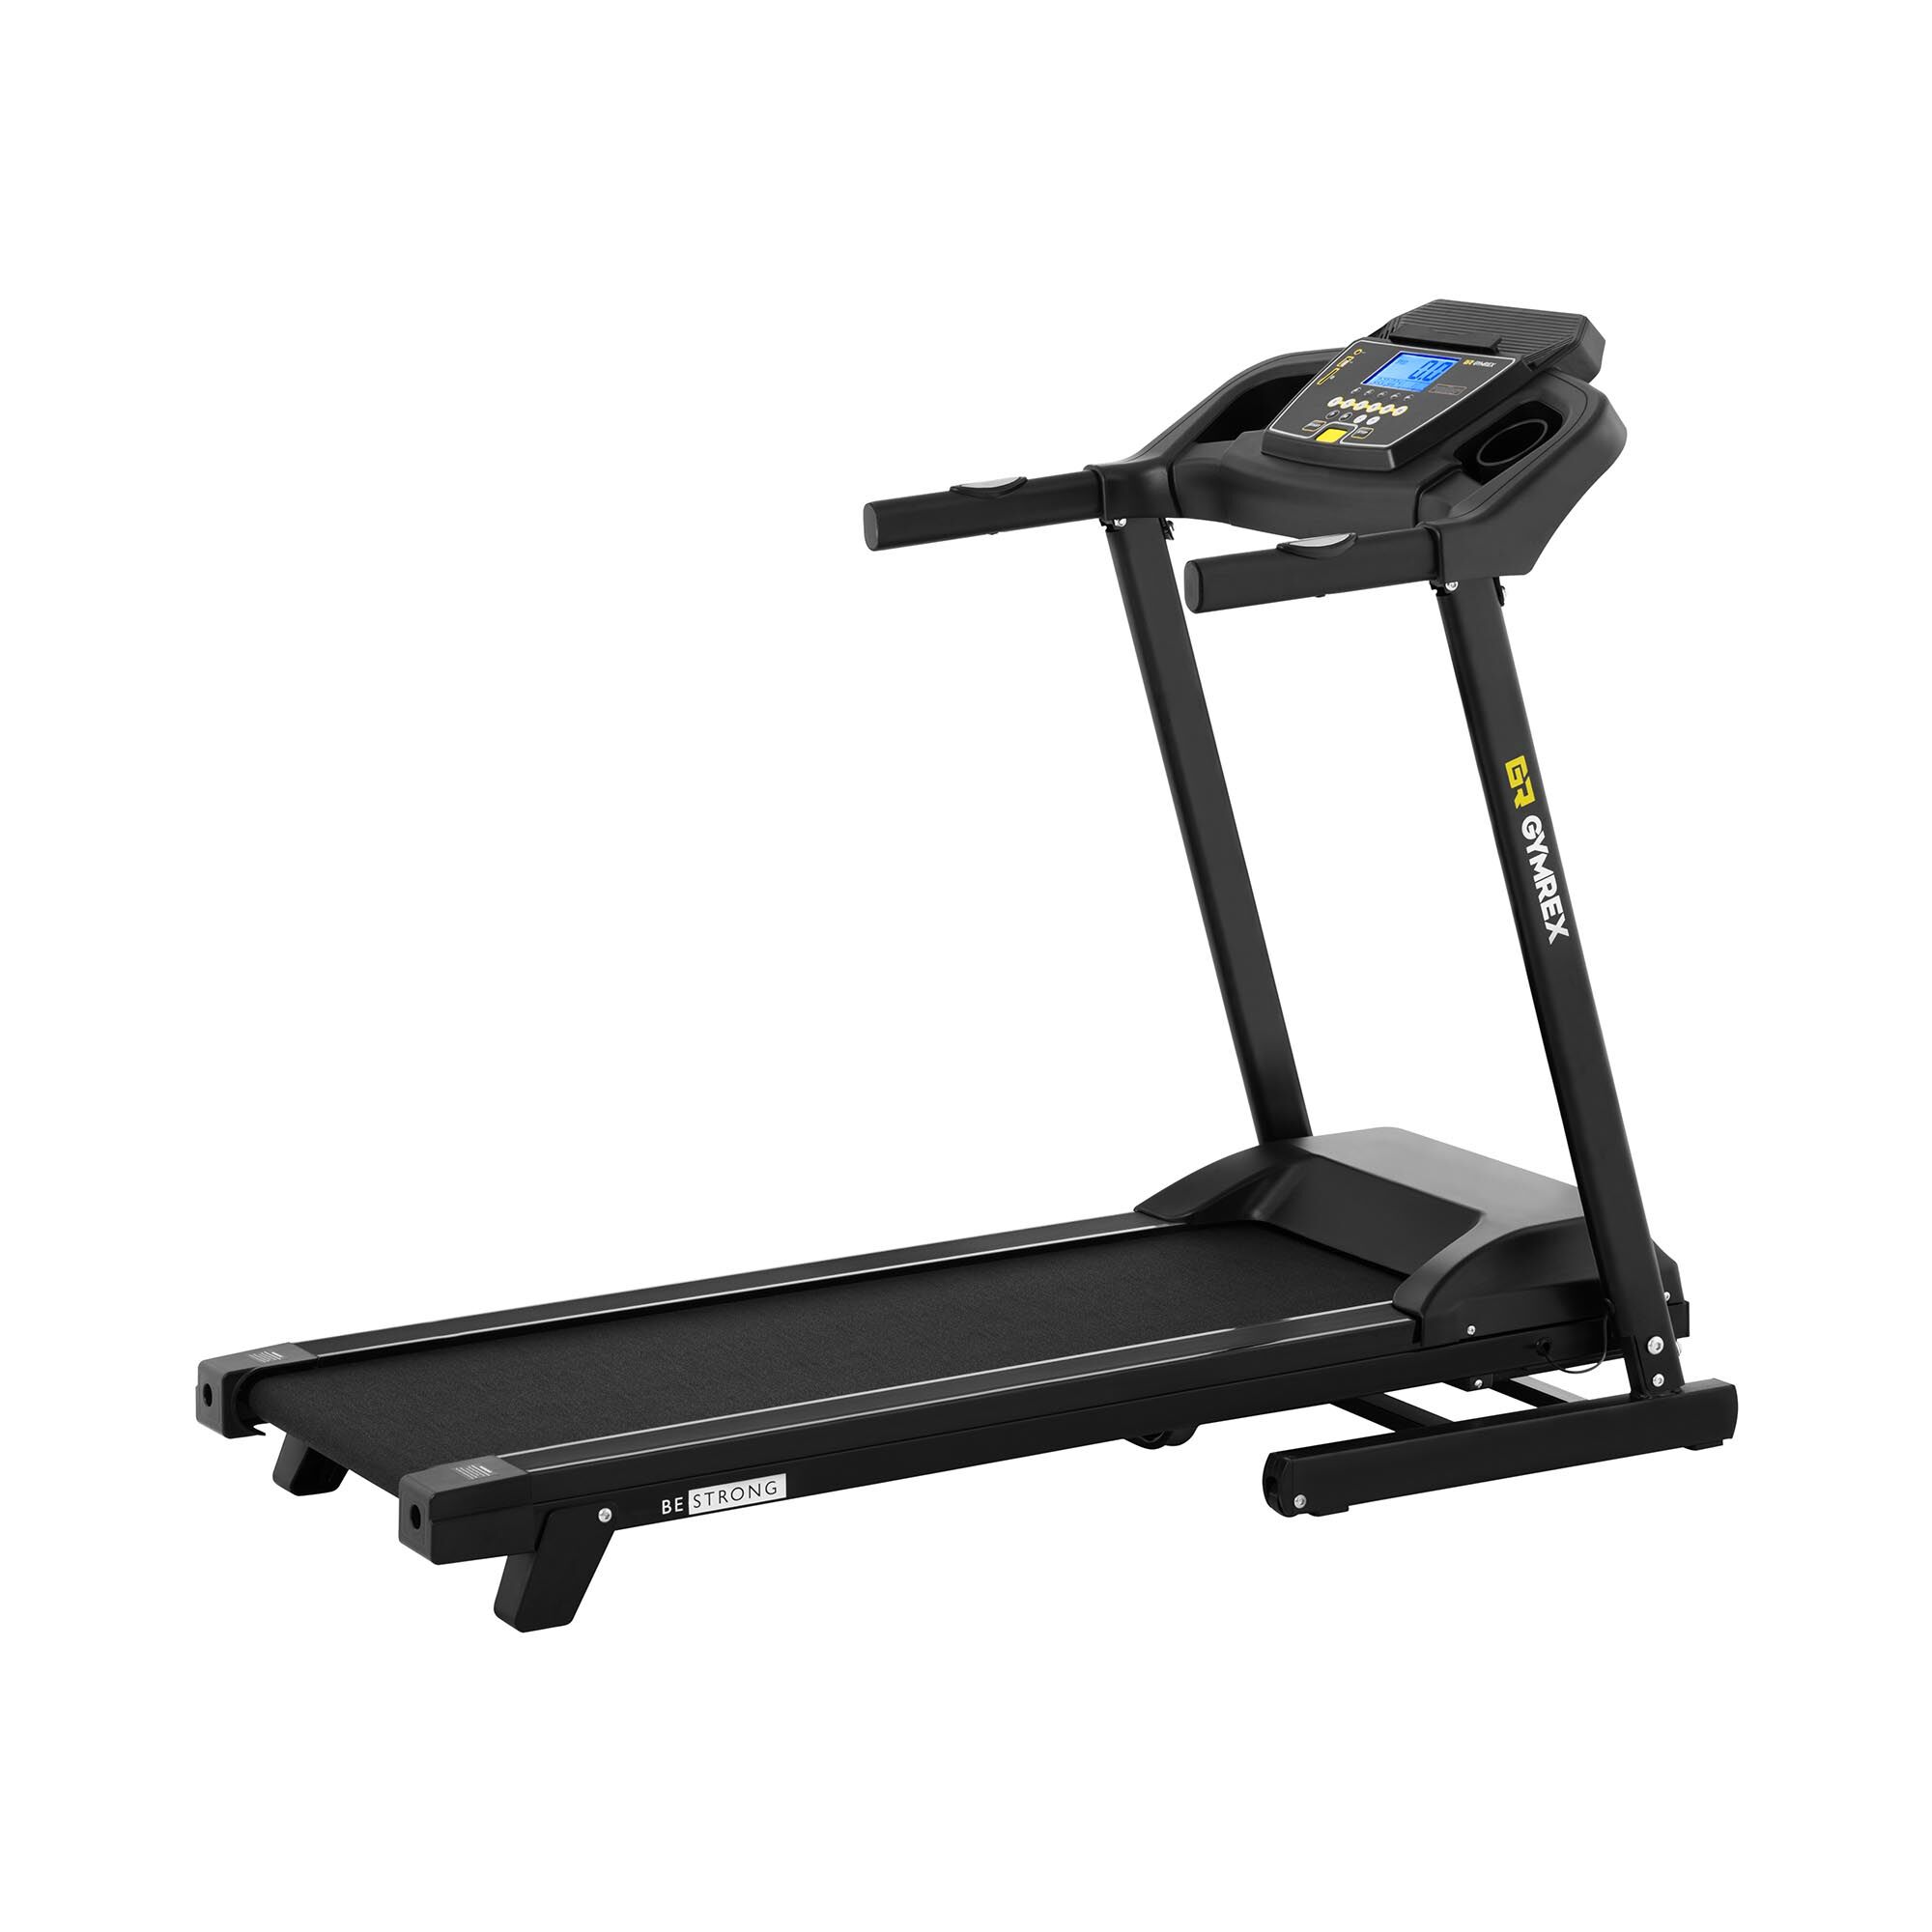 Gymrex Treadmill - folding - 1,471 W - 1 to 12 km/h - 120 kg - 2 incline levels